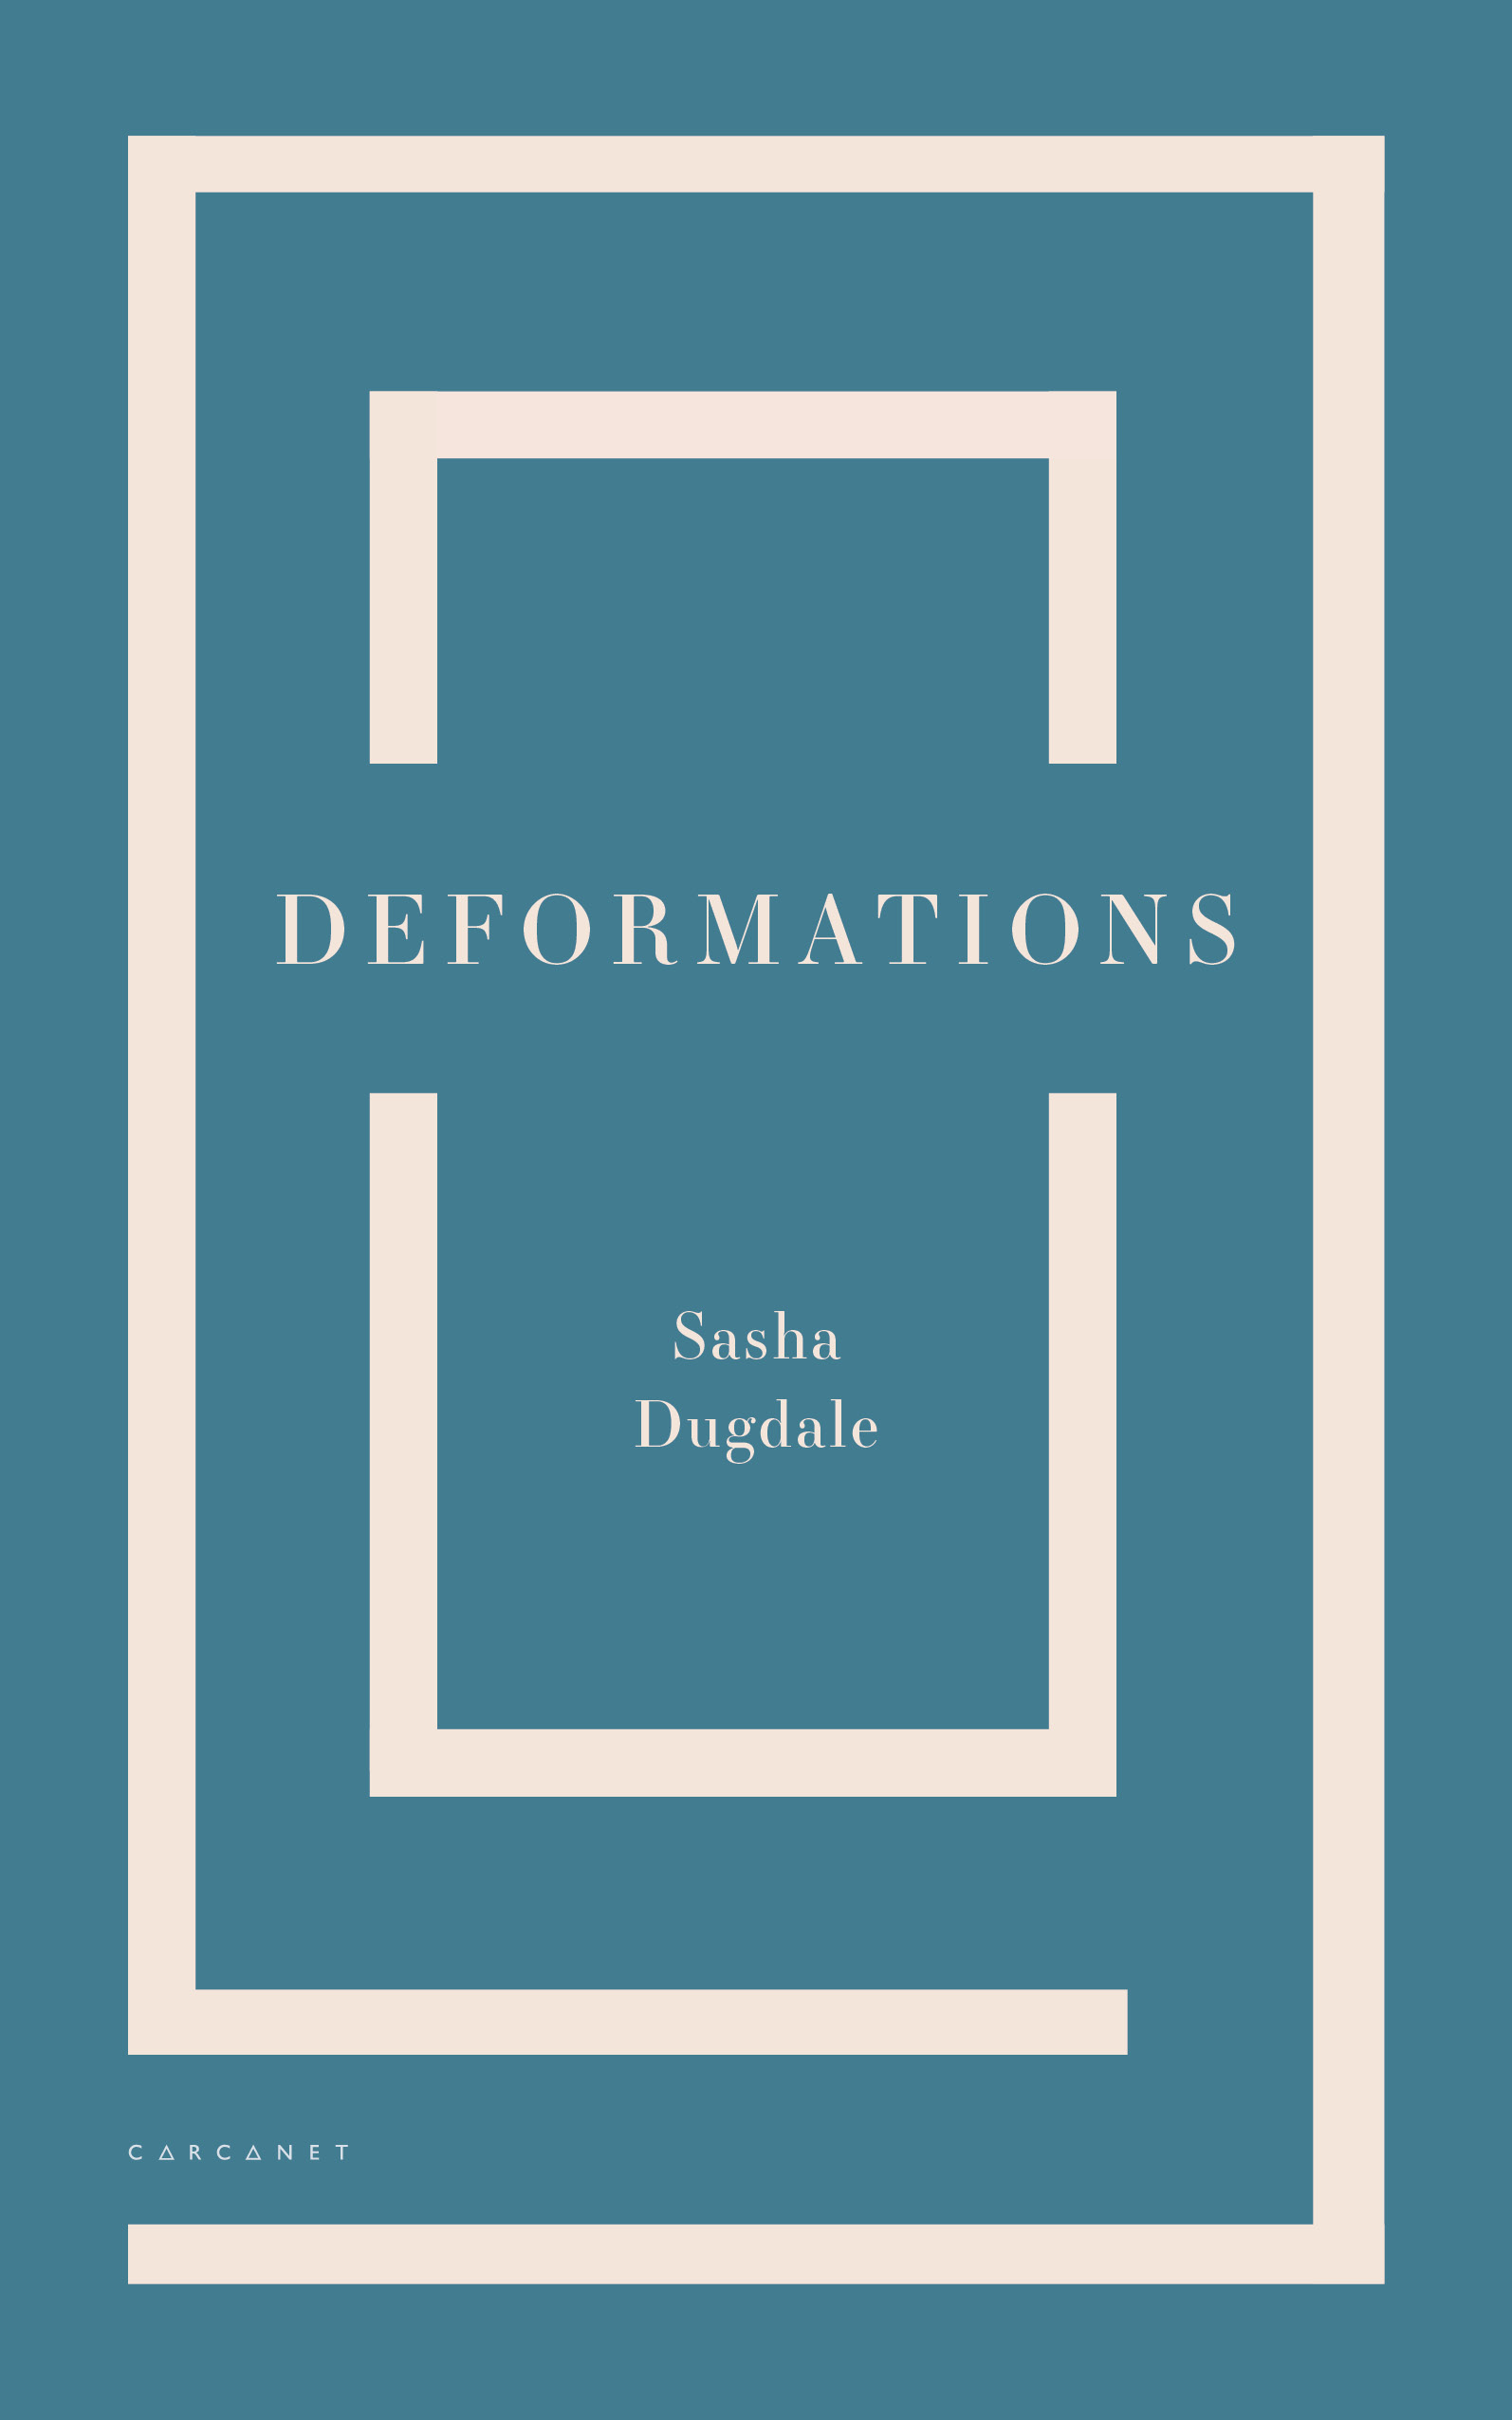 Deformations poetry book